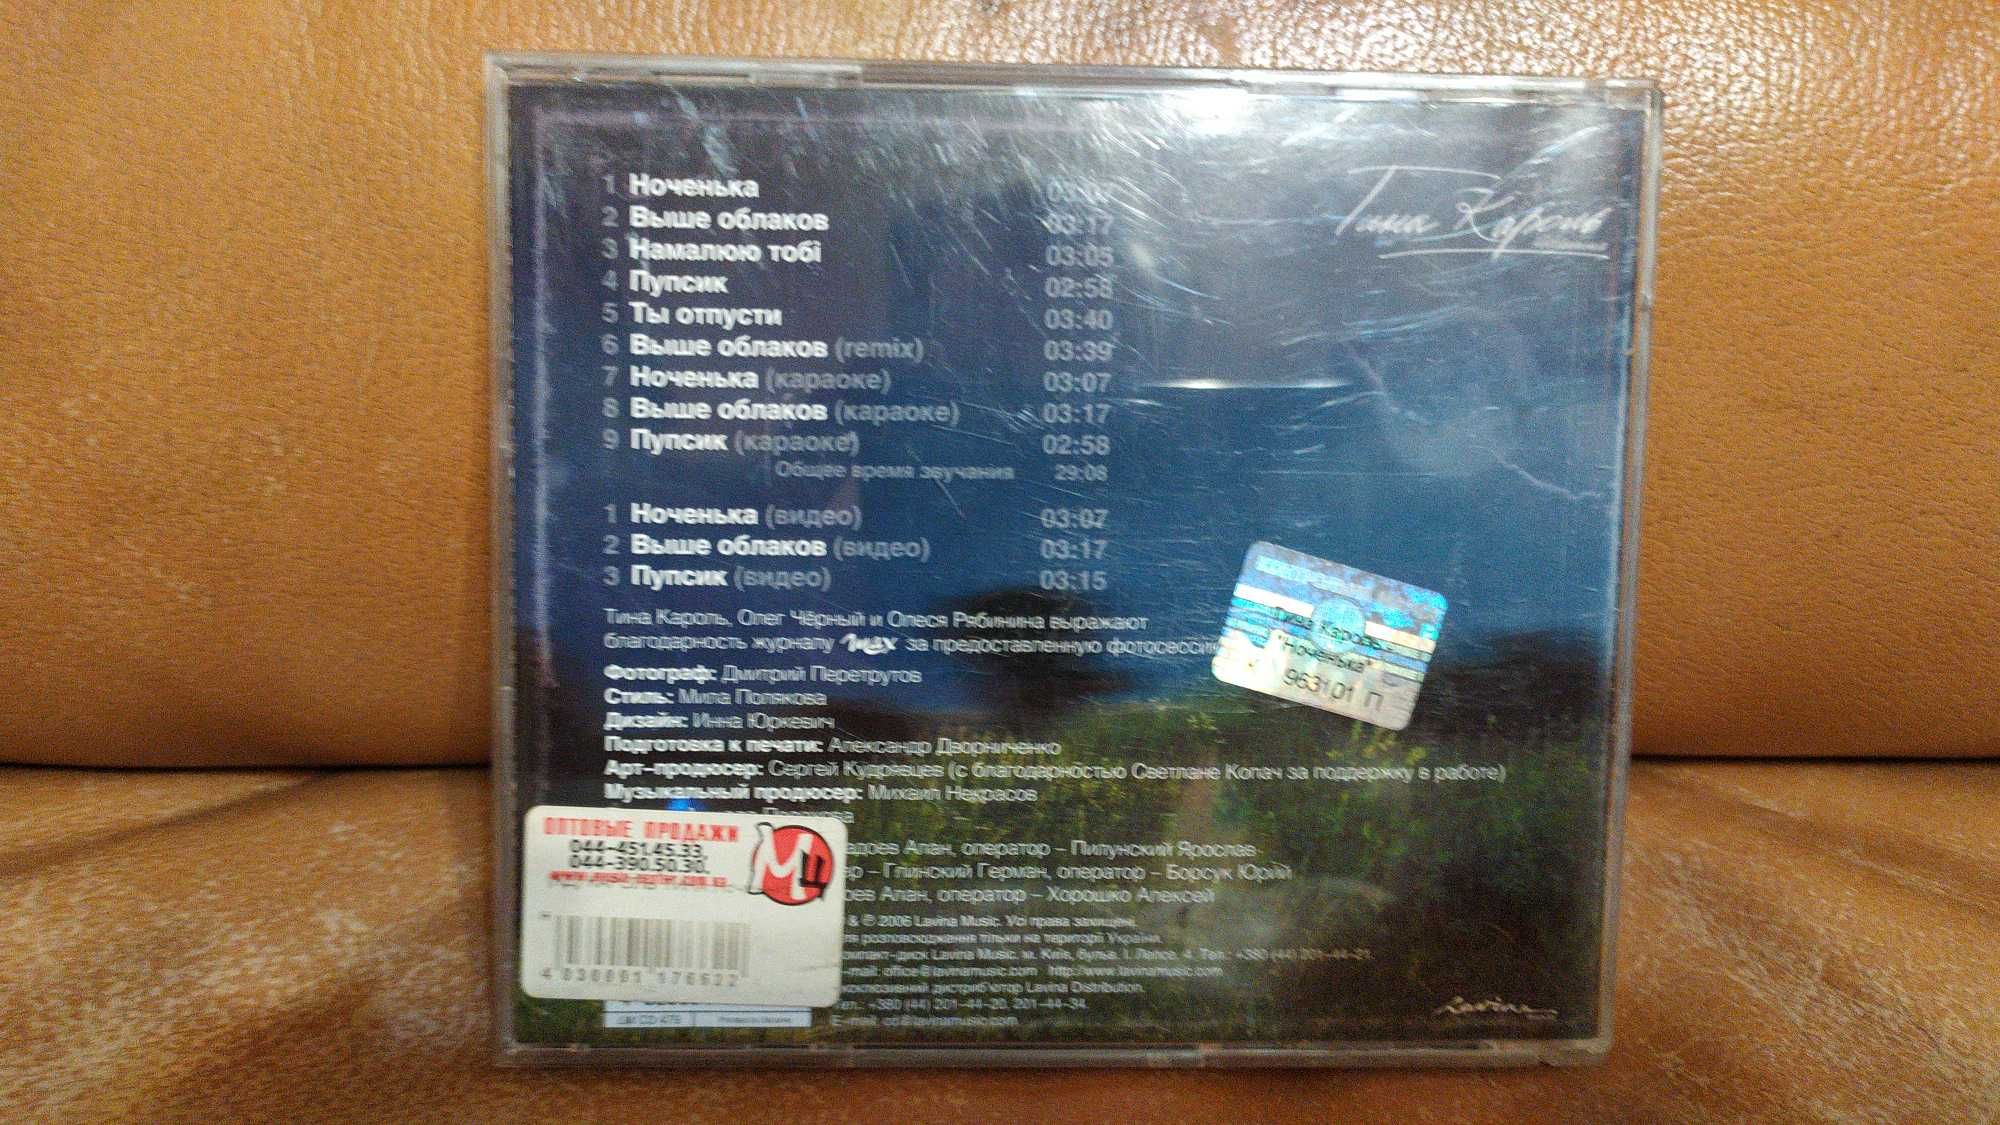 Тіна Кароль "Ноченька" (2006) CD